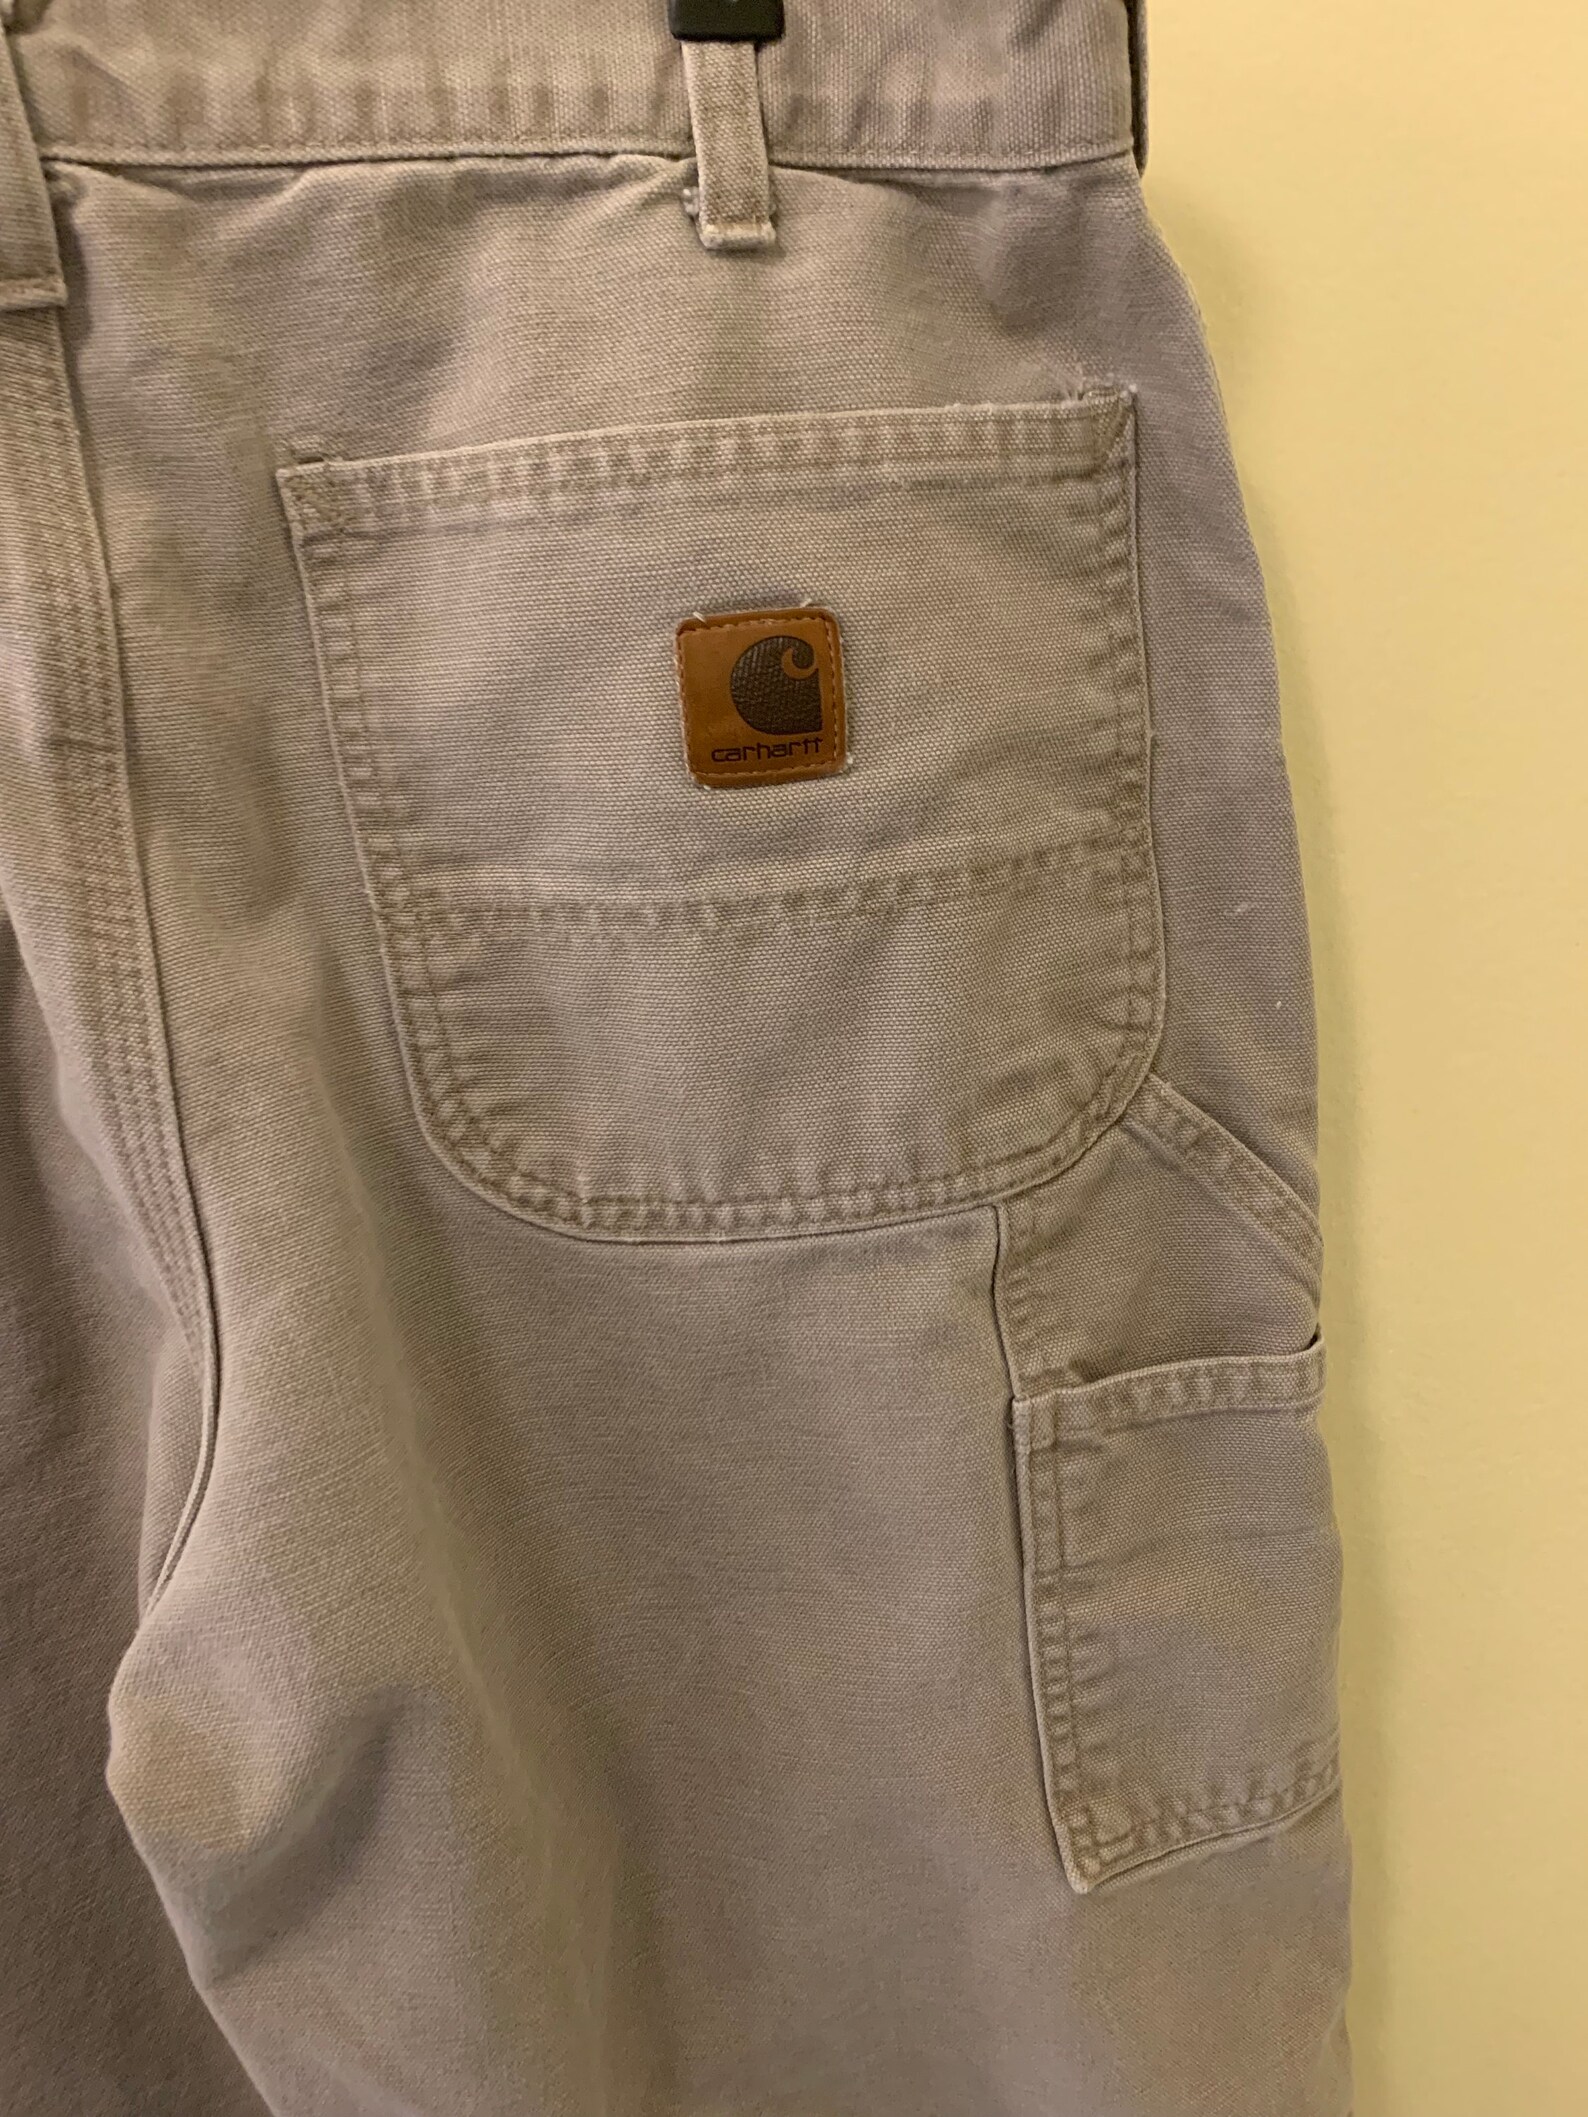 Vintage Carhartt Carpenter Jeans | Etsy